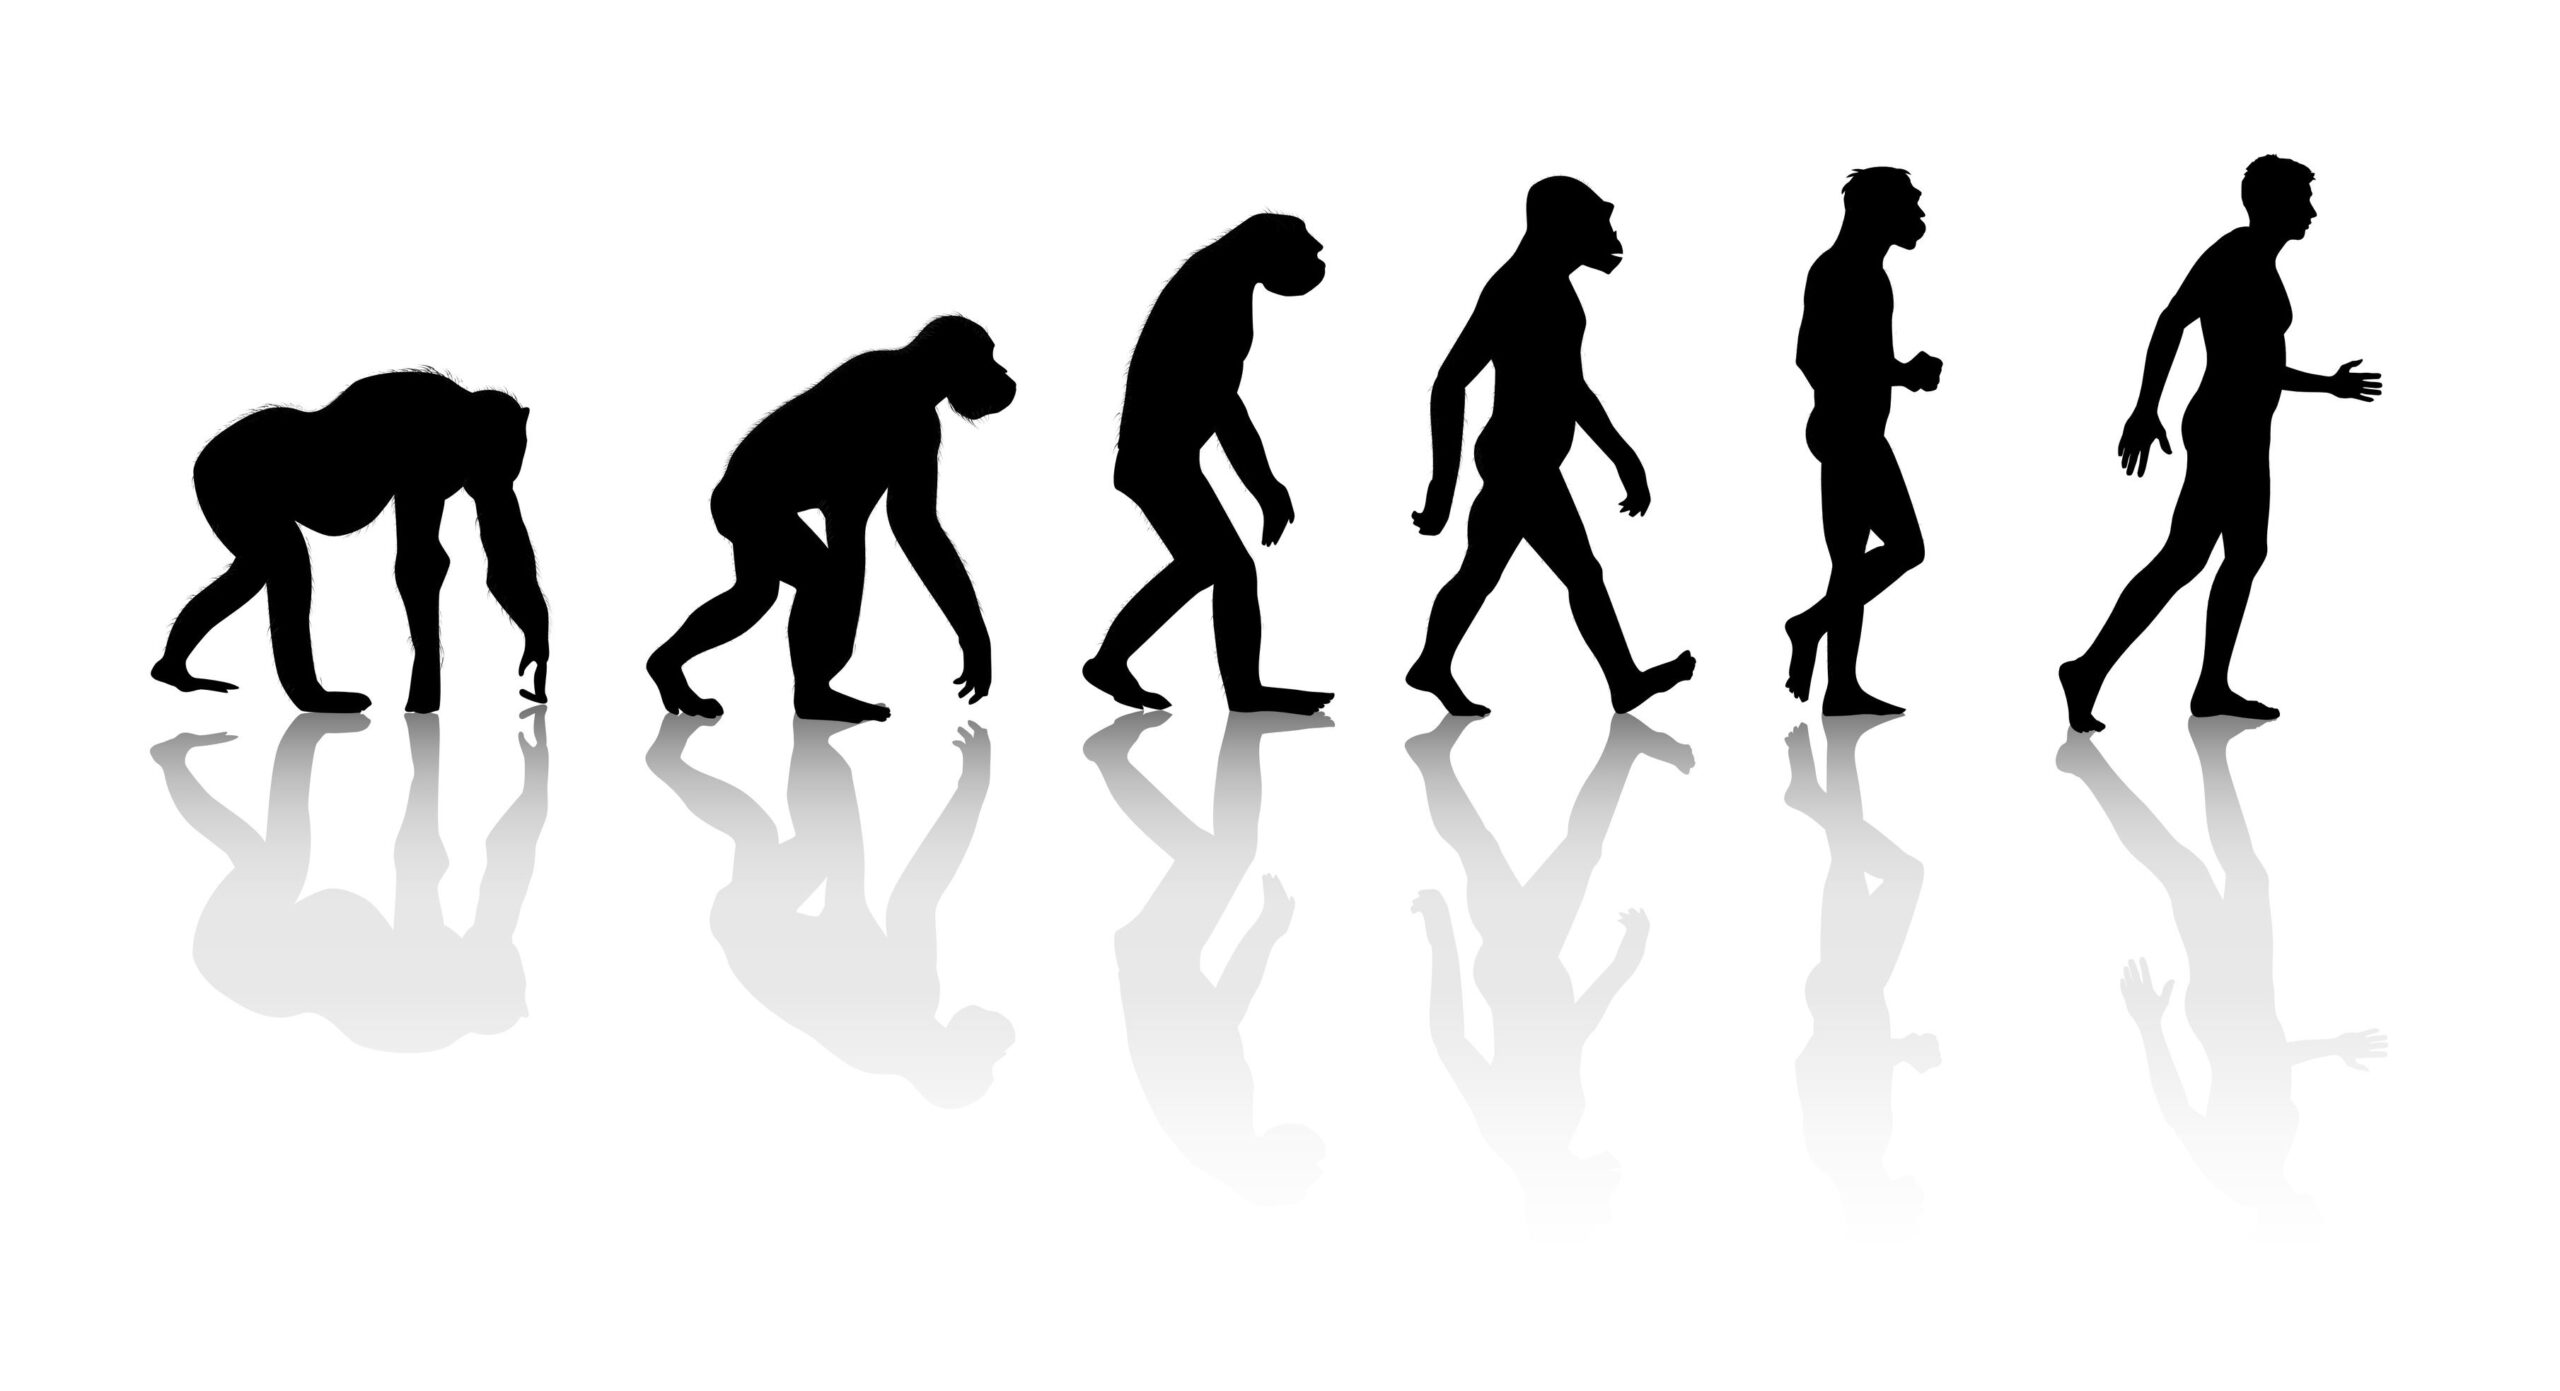 Darwin Evolution of Man scaled